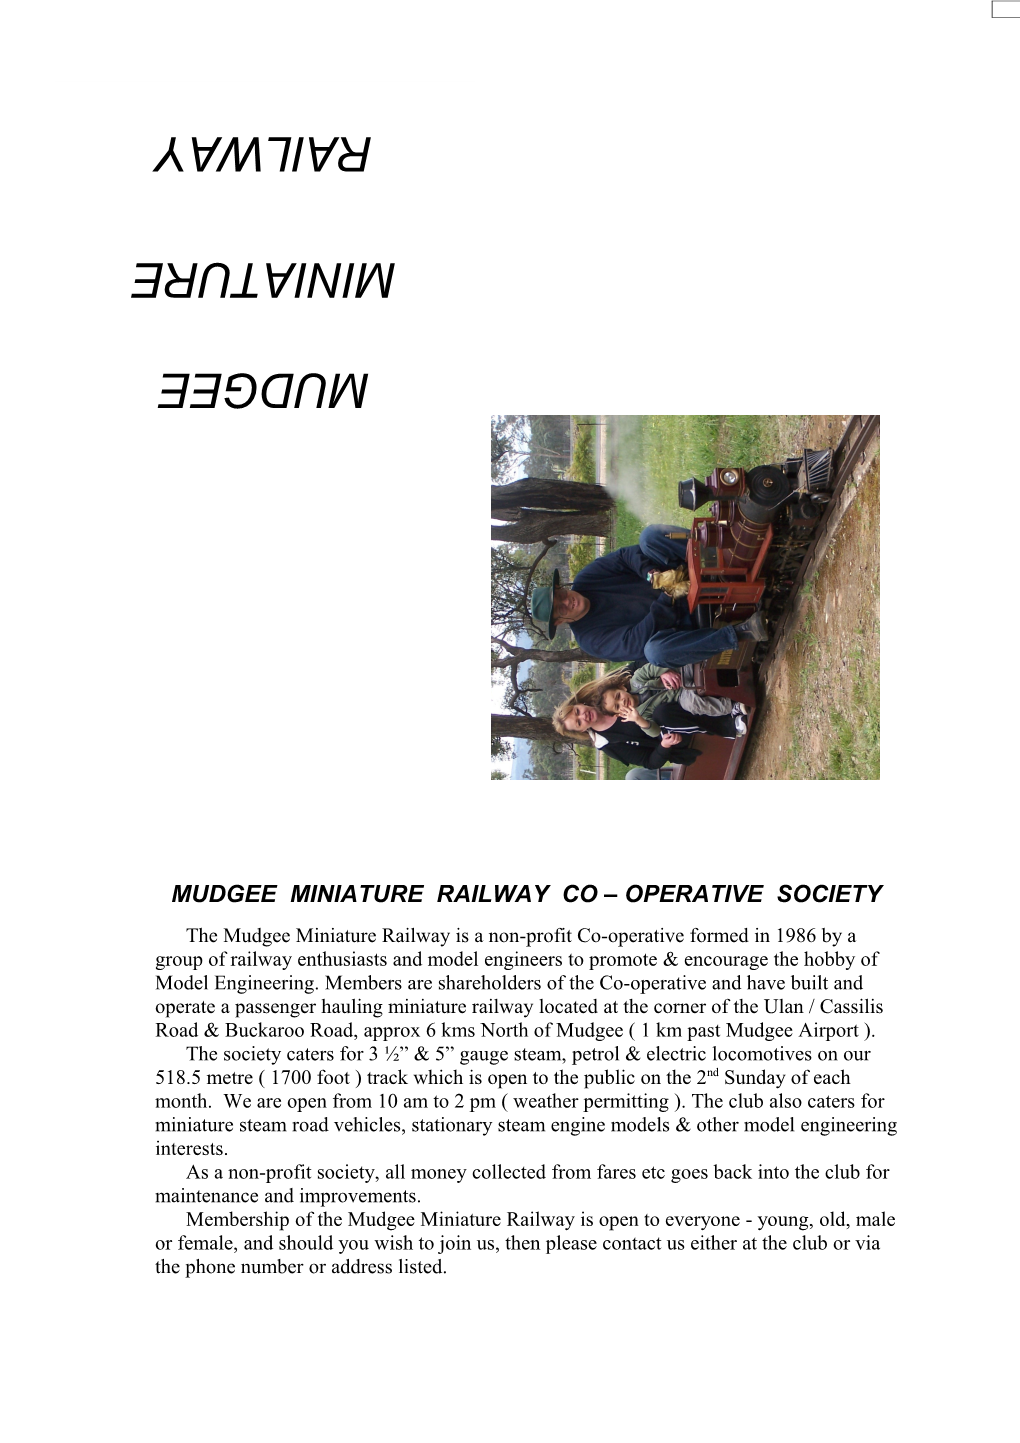 Mudgee Miniature Railway Co Operative Society